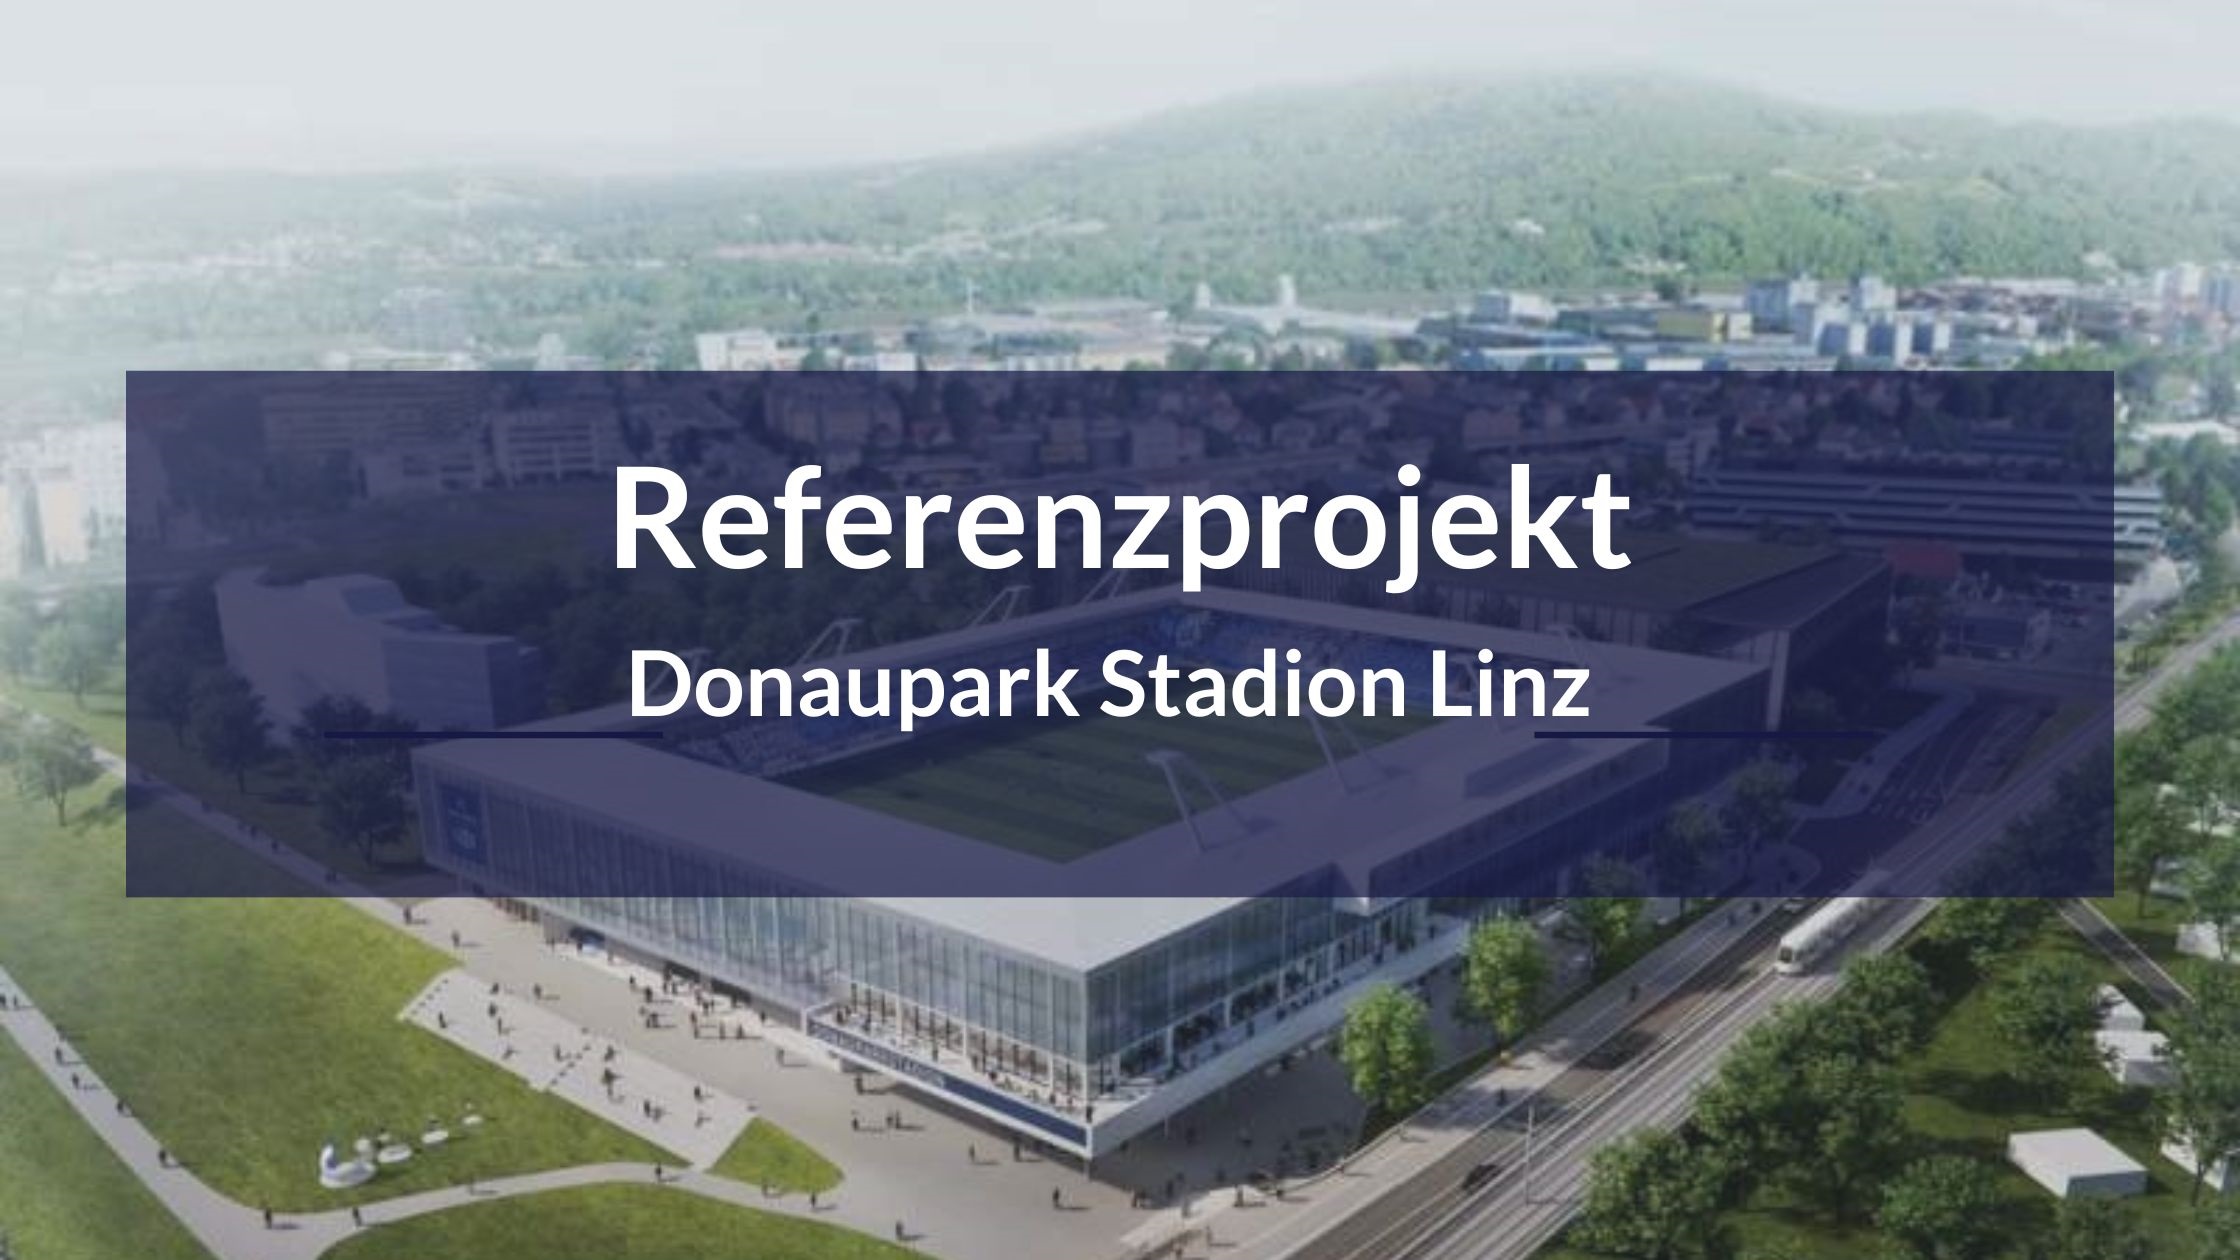 donaupark-stadion-linz-referenzprojekt